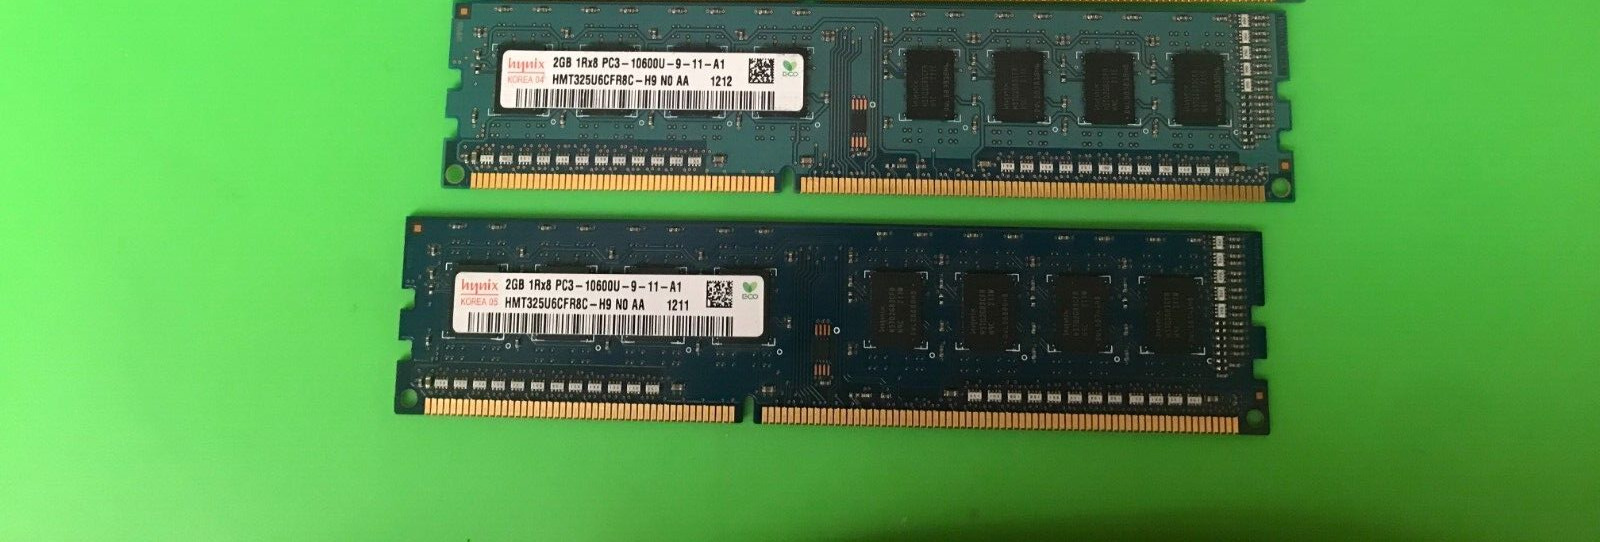 2GB Hynix DDR3 1333 desktop DIMMs PC3-10600U RAM HMT325U6CFR8C-H9